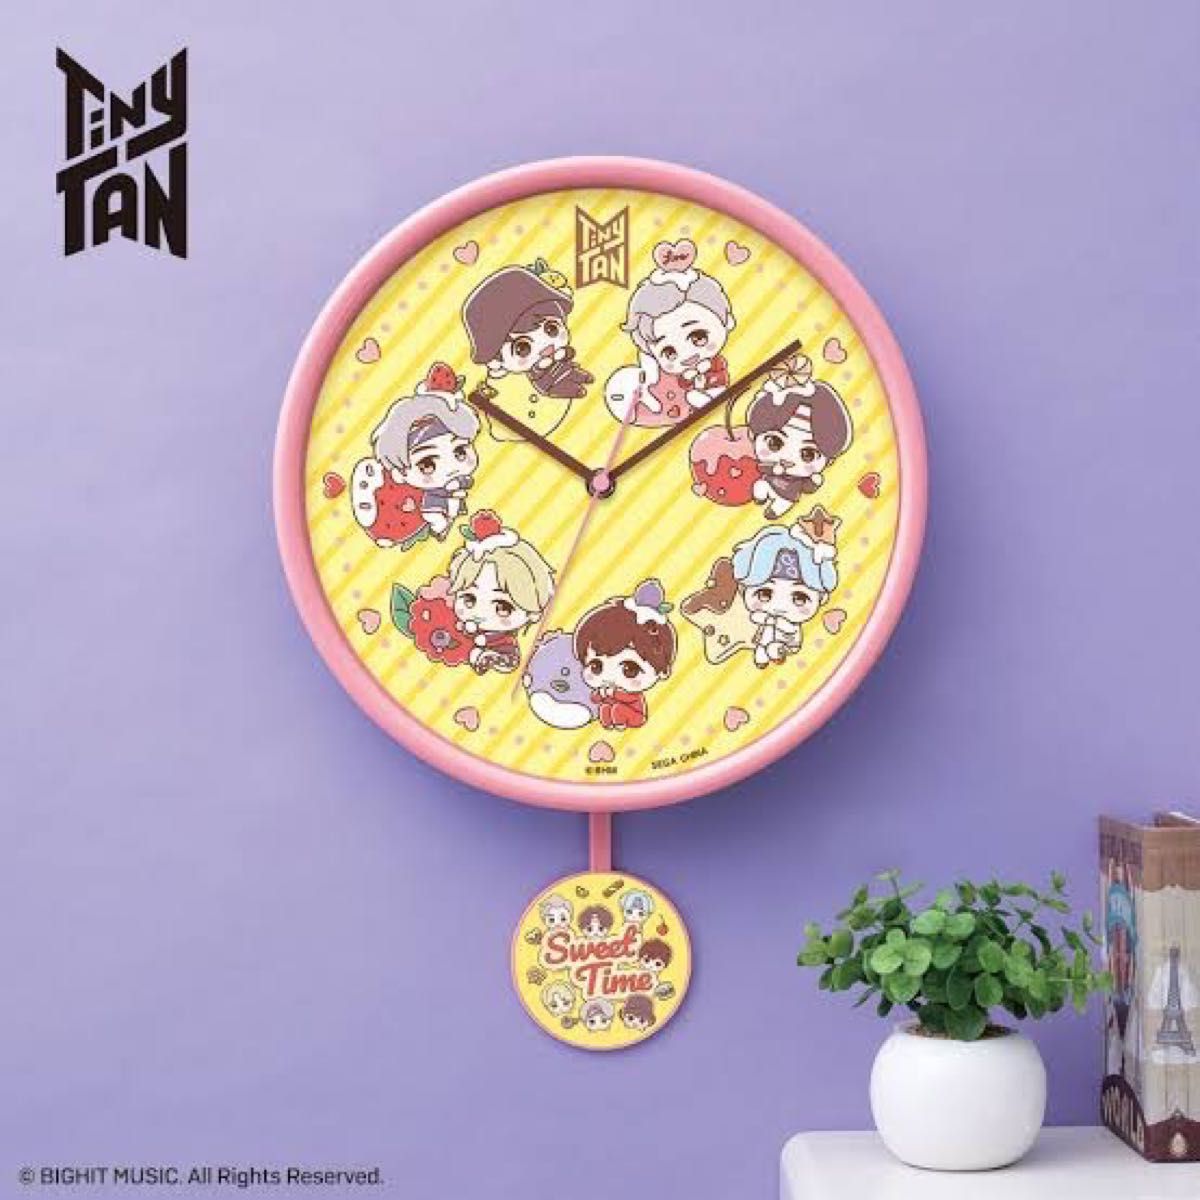 BTSオリジナルキャラクター TinyTAN Sweet Time プレミアムスイングウォールクロック 壁掛け時計